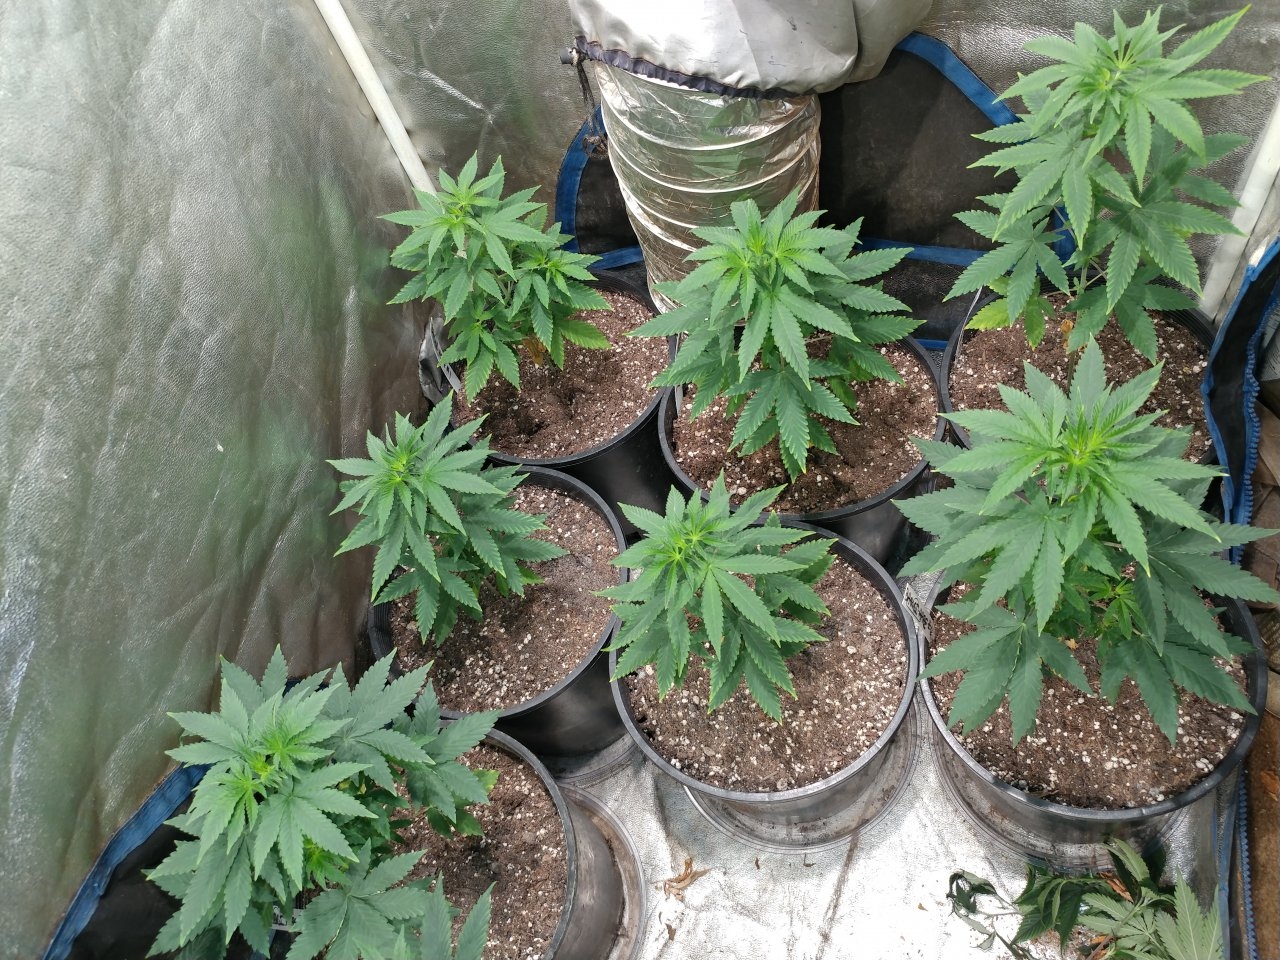 Icemud_Bangi Haze F9_veg_cannabis_seed_led grow light_indoor (3).jpg